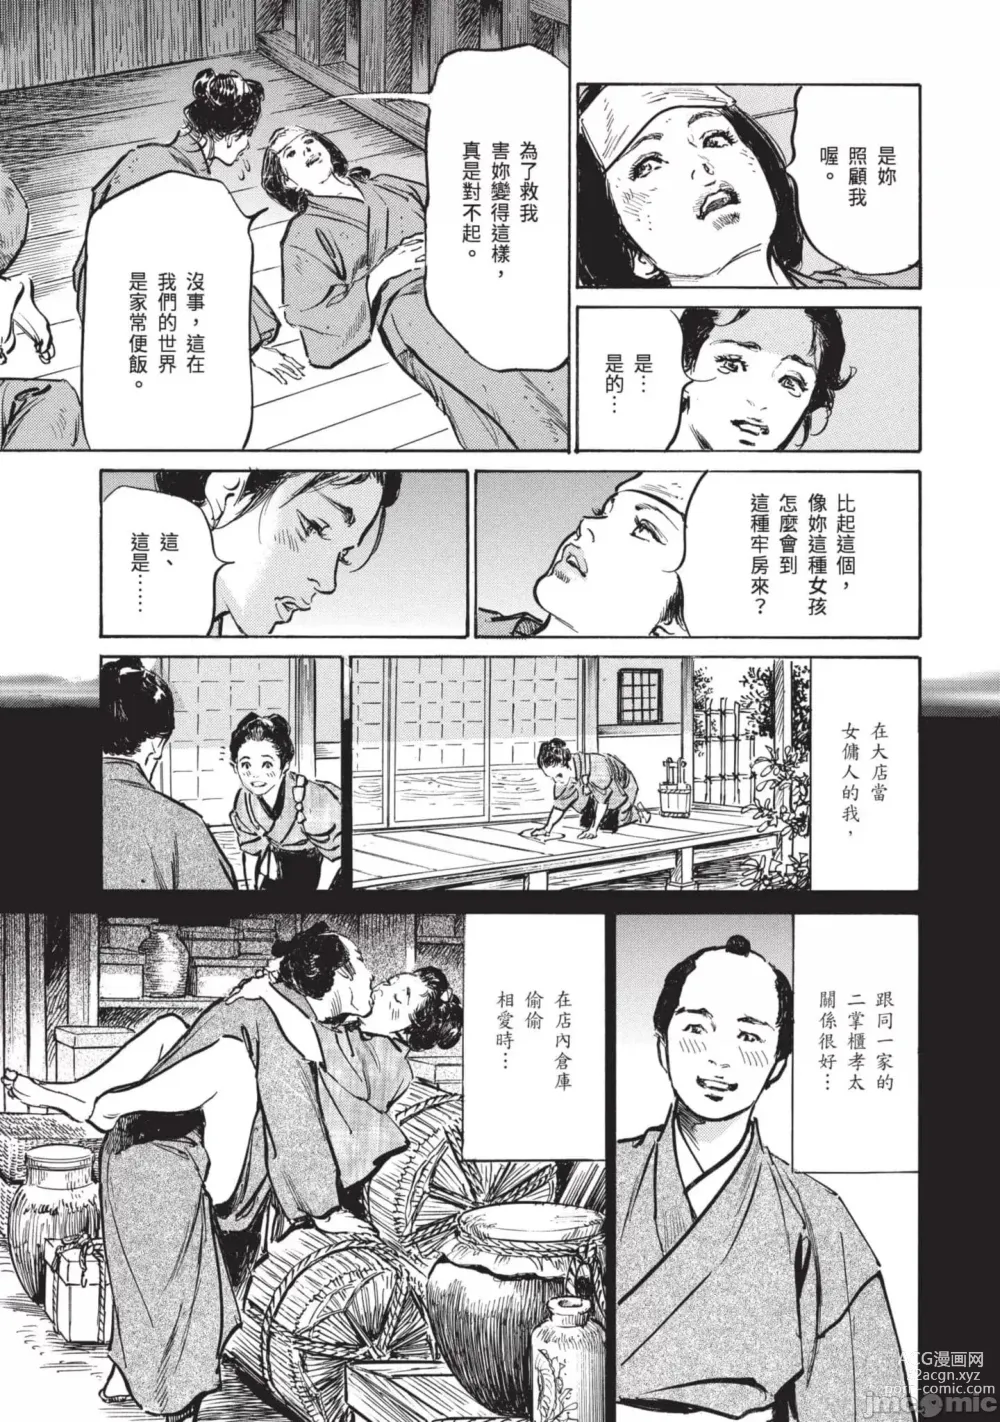 Page 12 of manga Inshuu Hiroku Midare Mandara 3